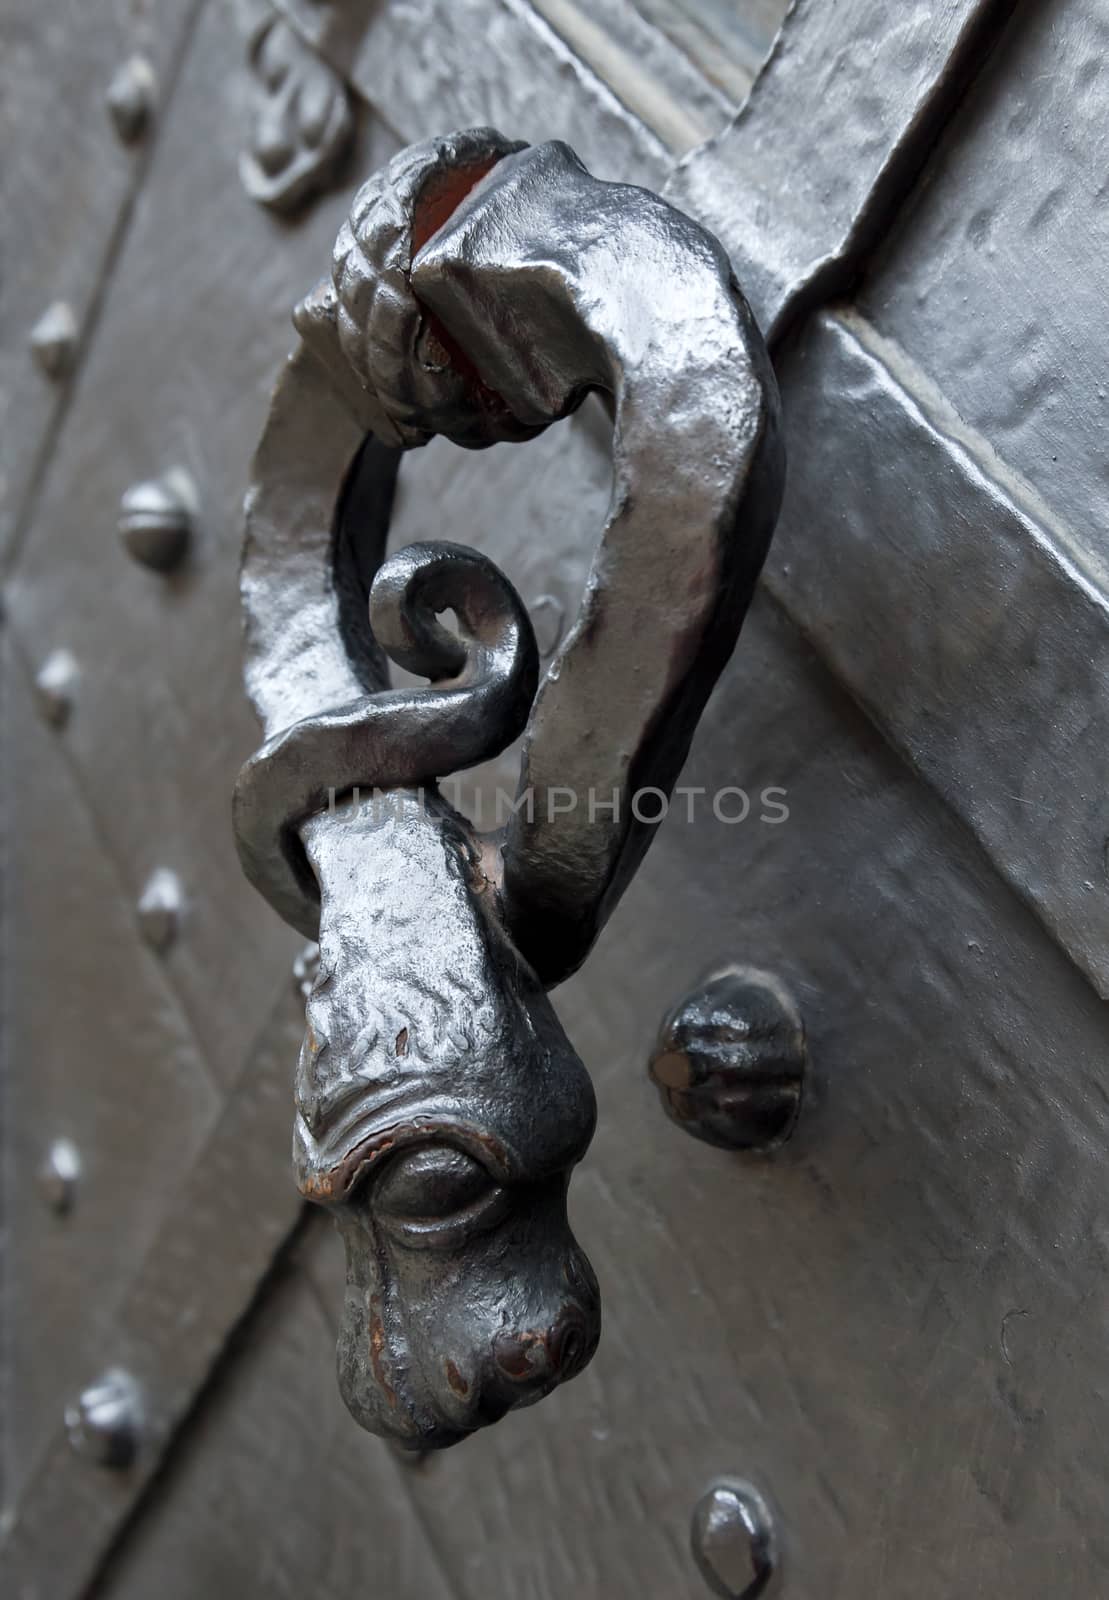 Door knocker in a shape of a snake by Goodday